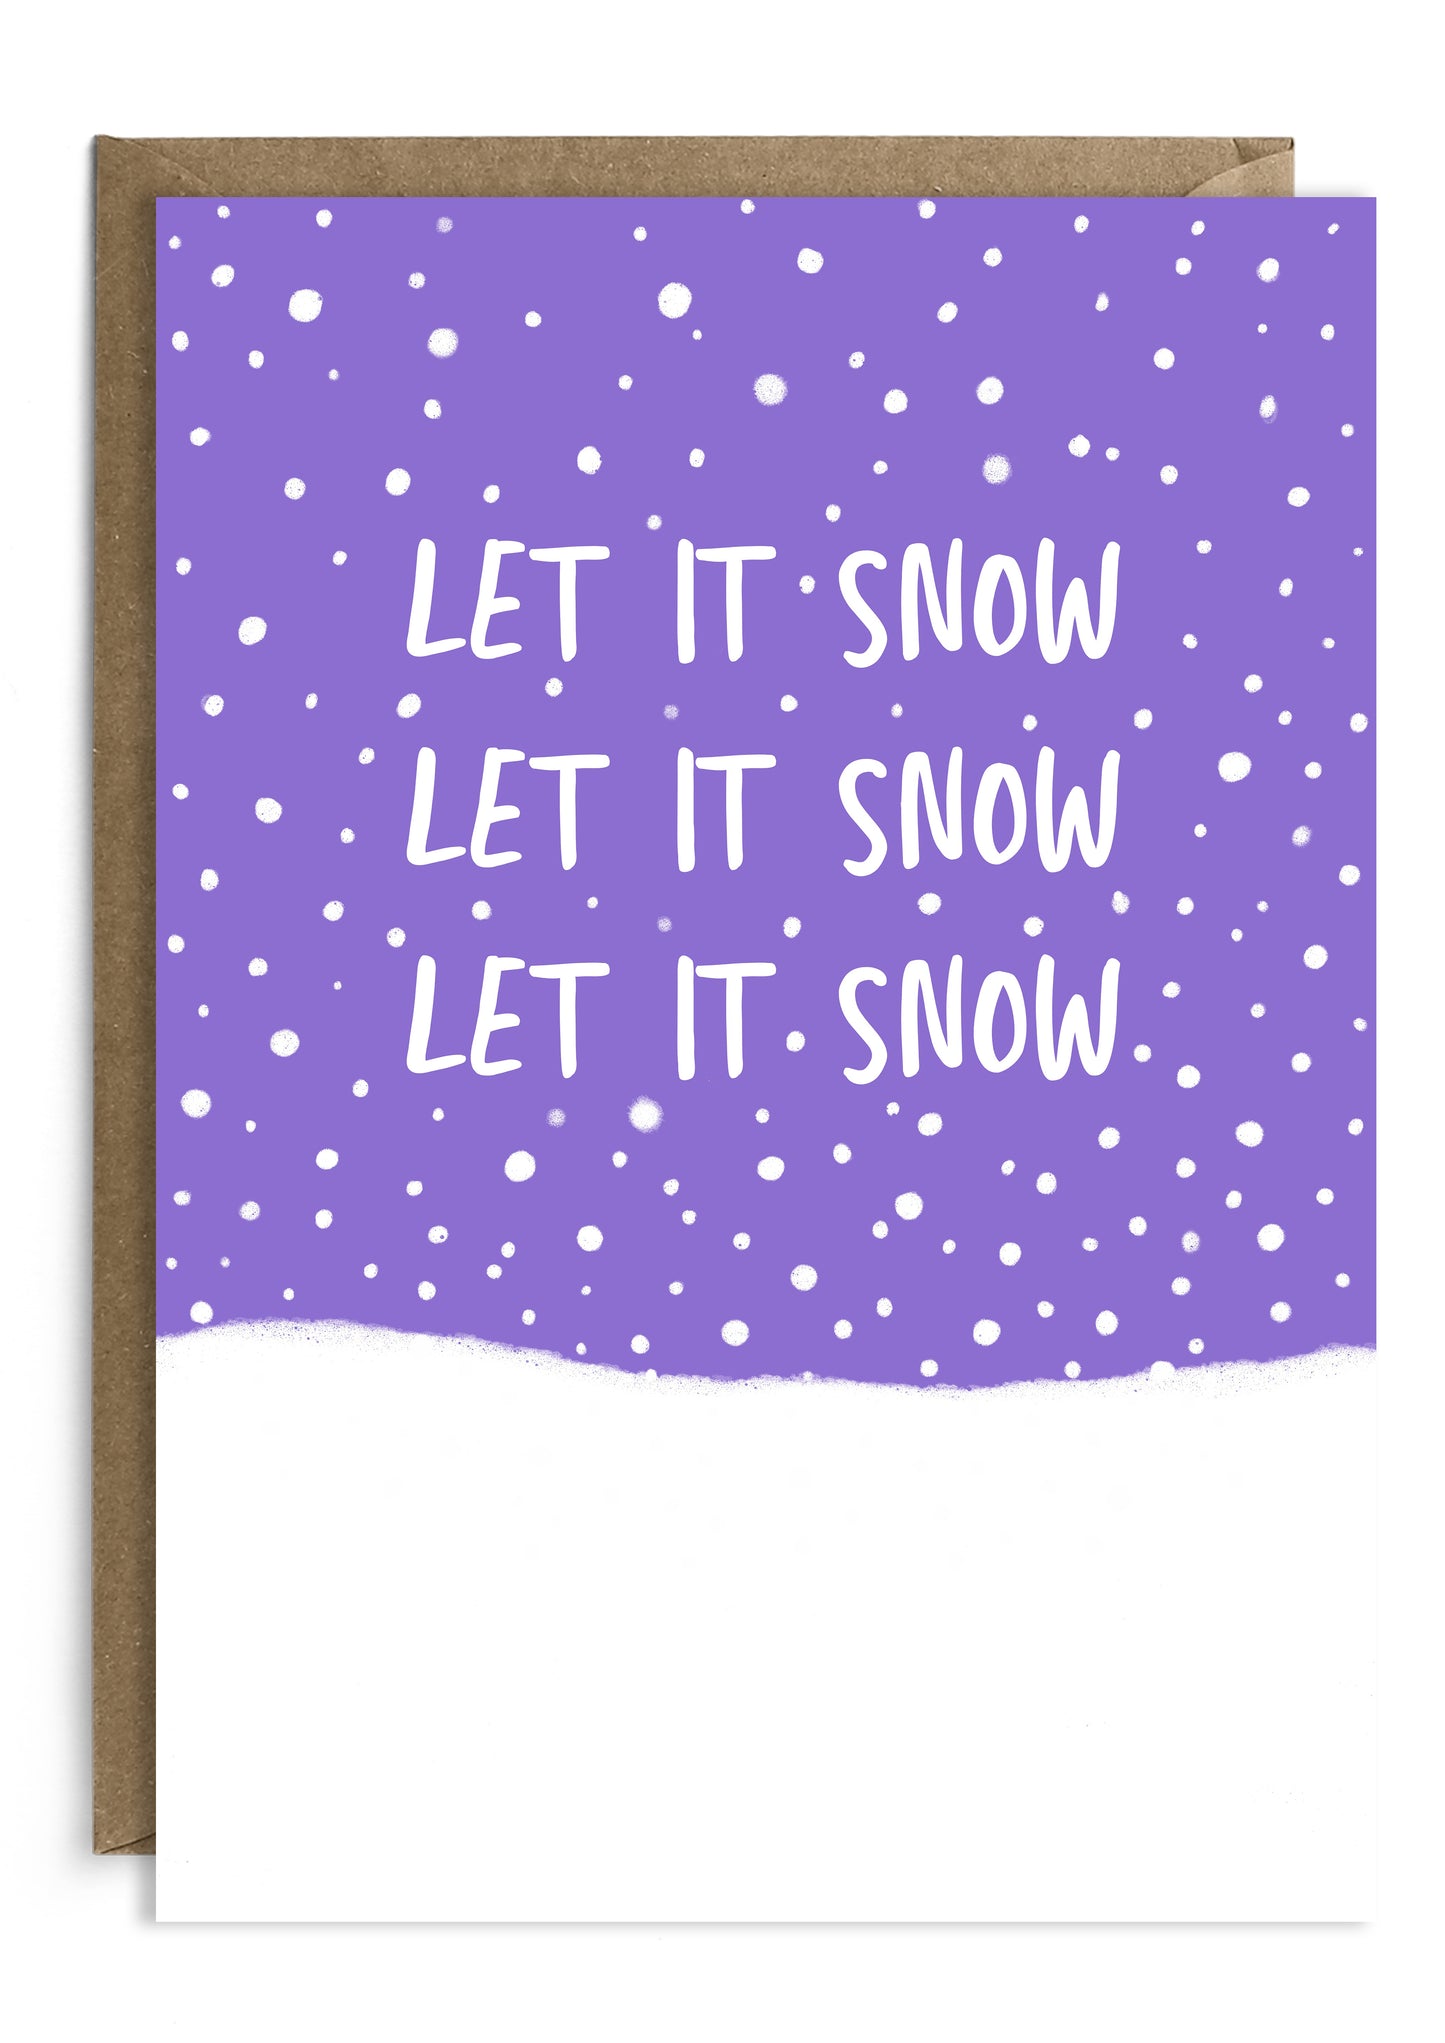 Let It Snow Christmas Card | Holiday Card | Seasonal Card